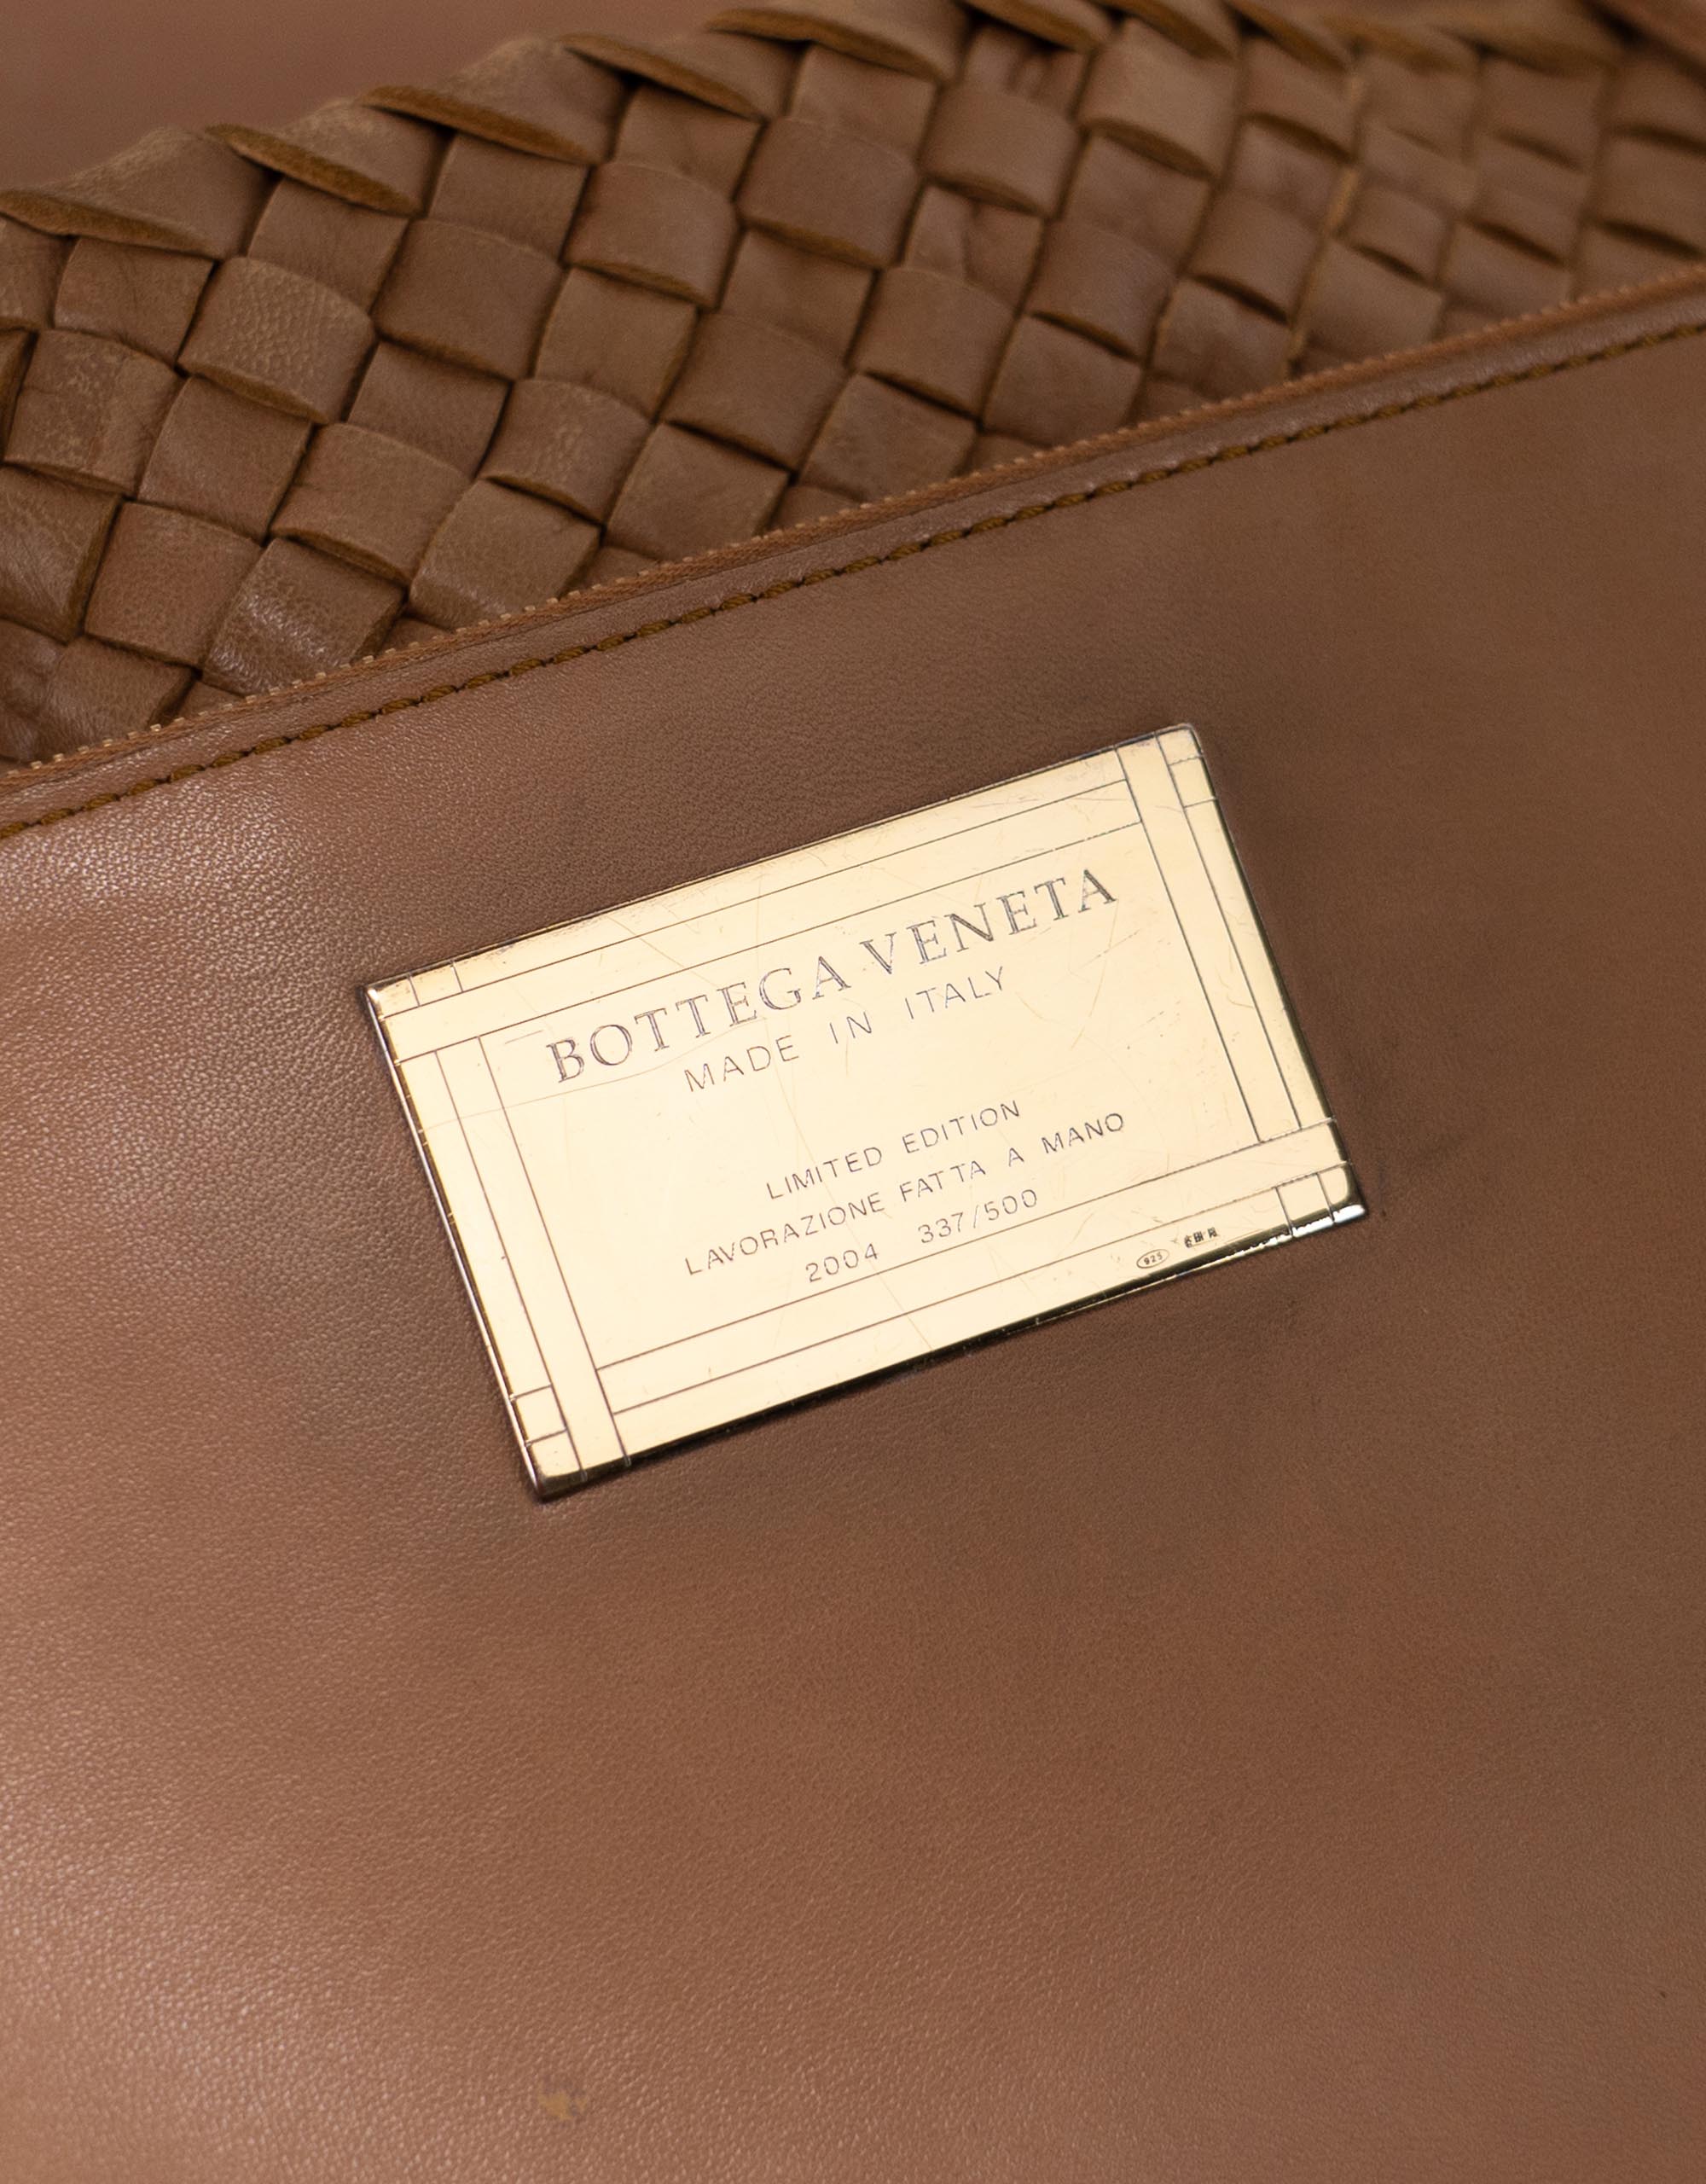 Authentic Bottega Veneta Gold Solid Leather Bag on sale at JHROP. Luxury  Designer Consignment Resale @jhrop_official